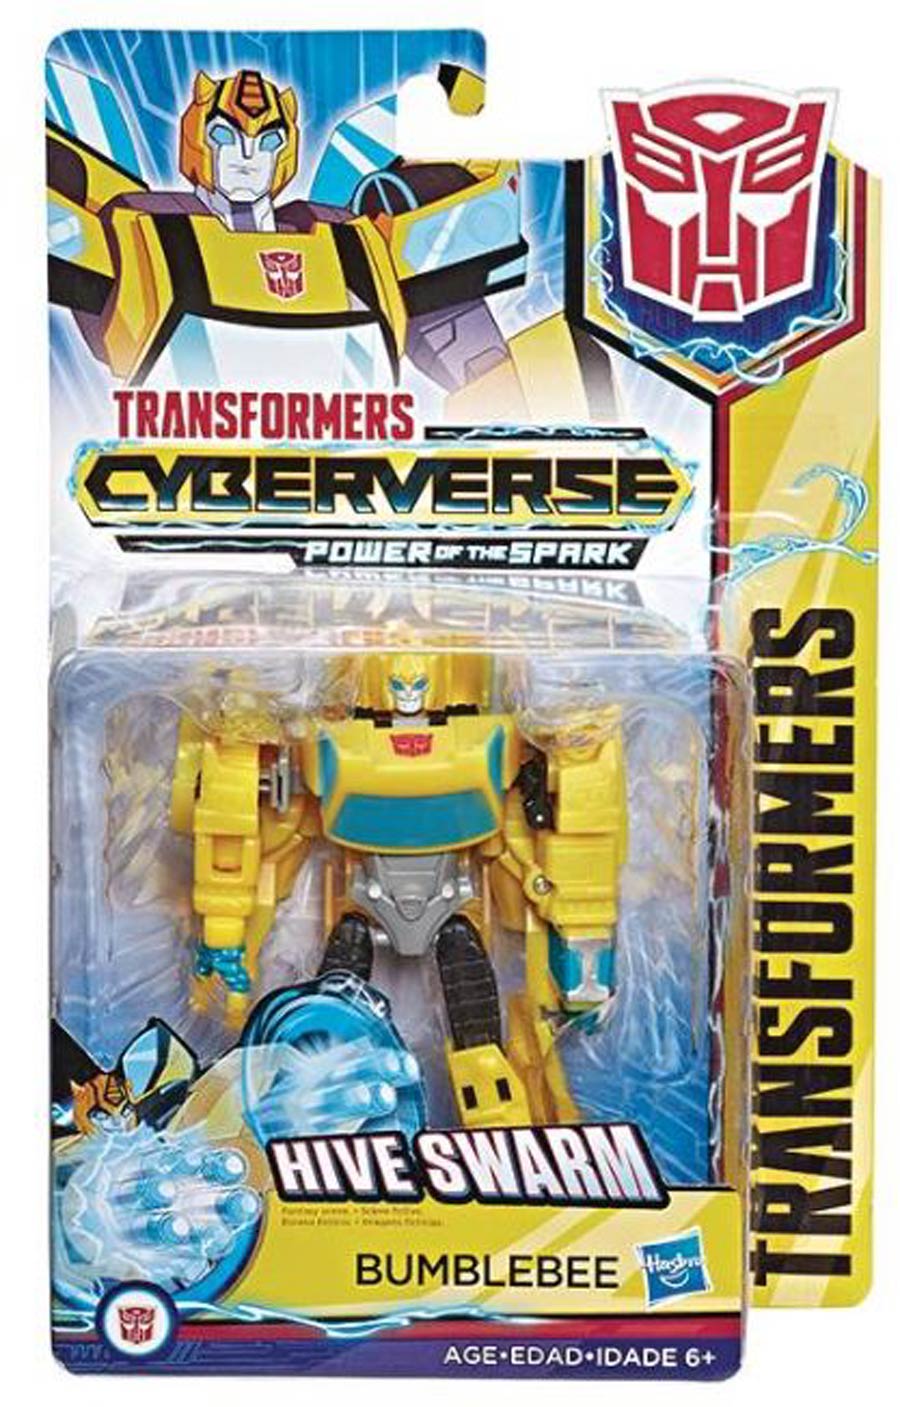 Transformers Cyberverse Warrior Action Figure Assortment 201903 - Bumblebee